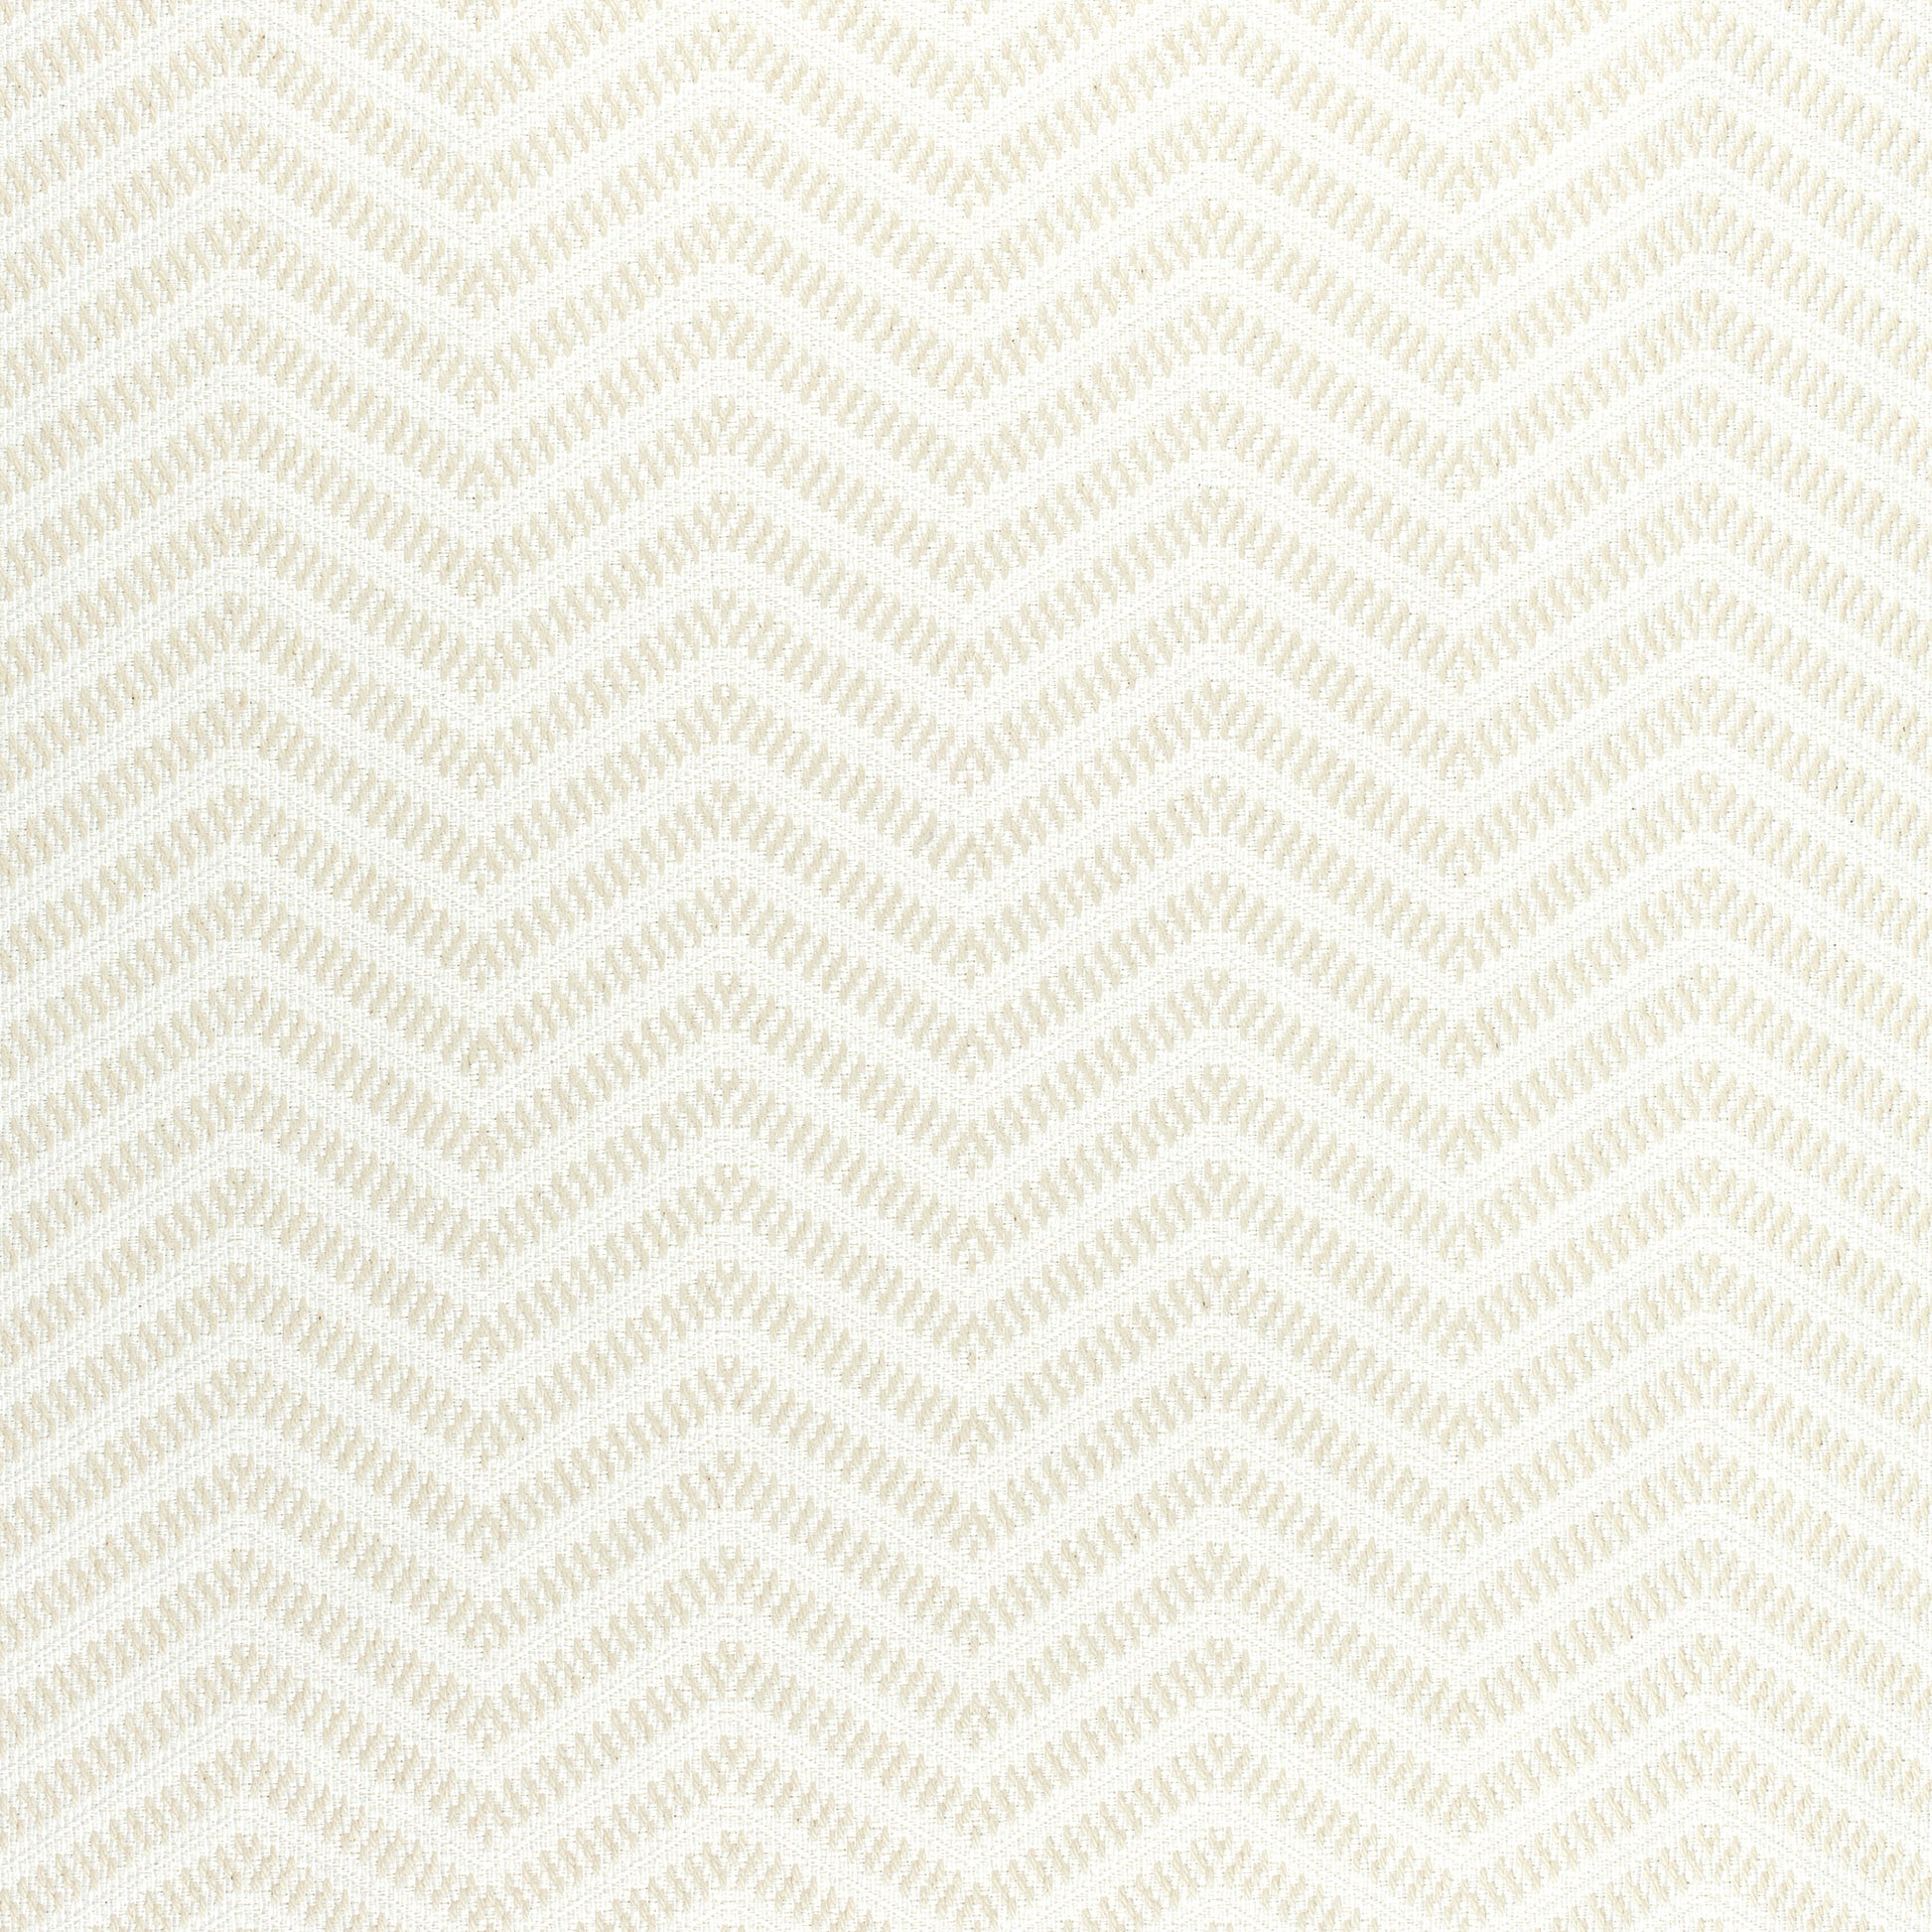 Purchase Thibaut Fabric Pattern number W80631 pattern name Matari Chevron color Almond